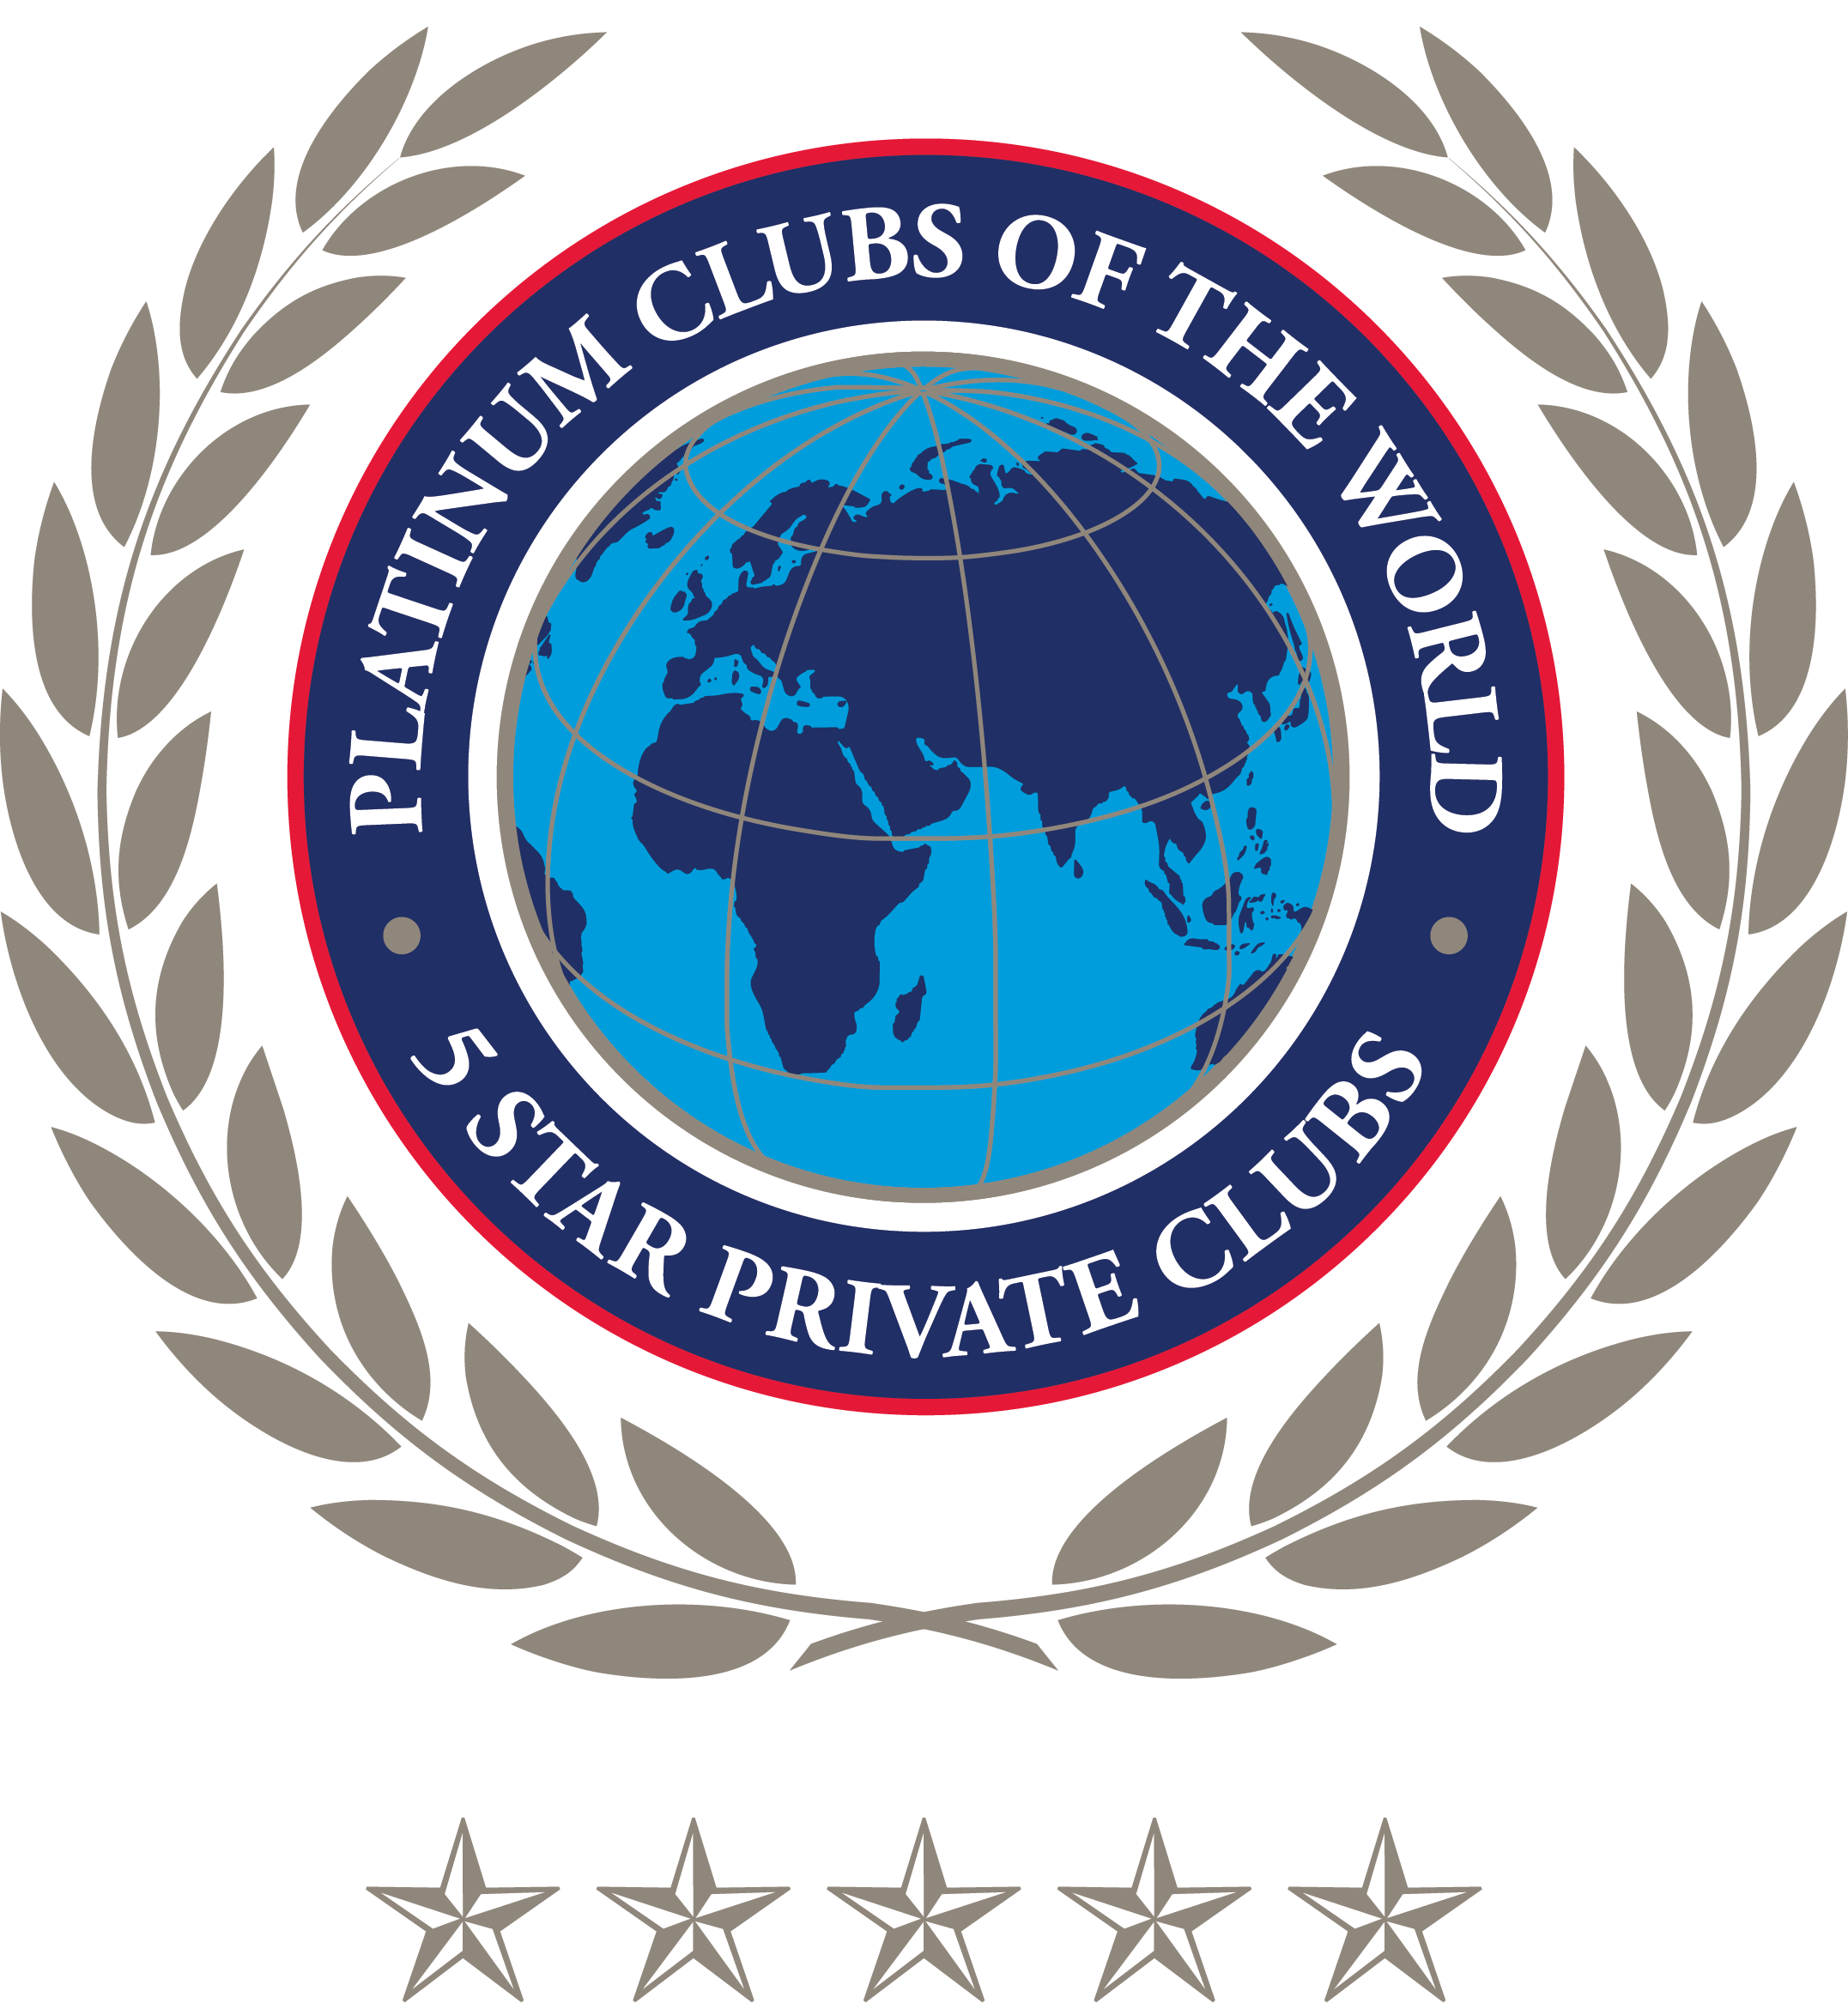 Platinum Clubs of the World award logo